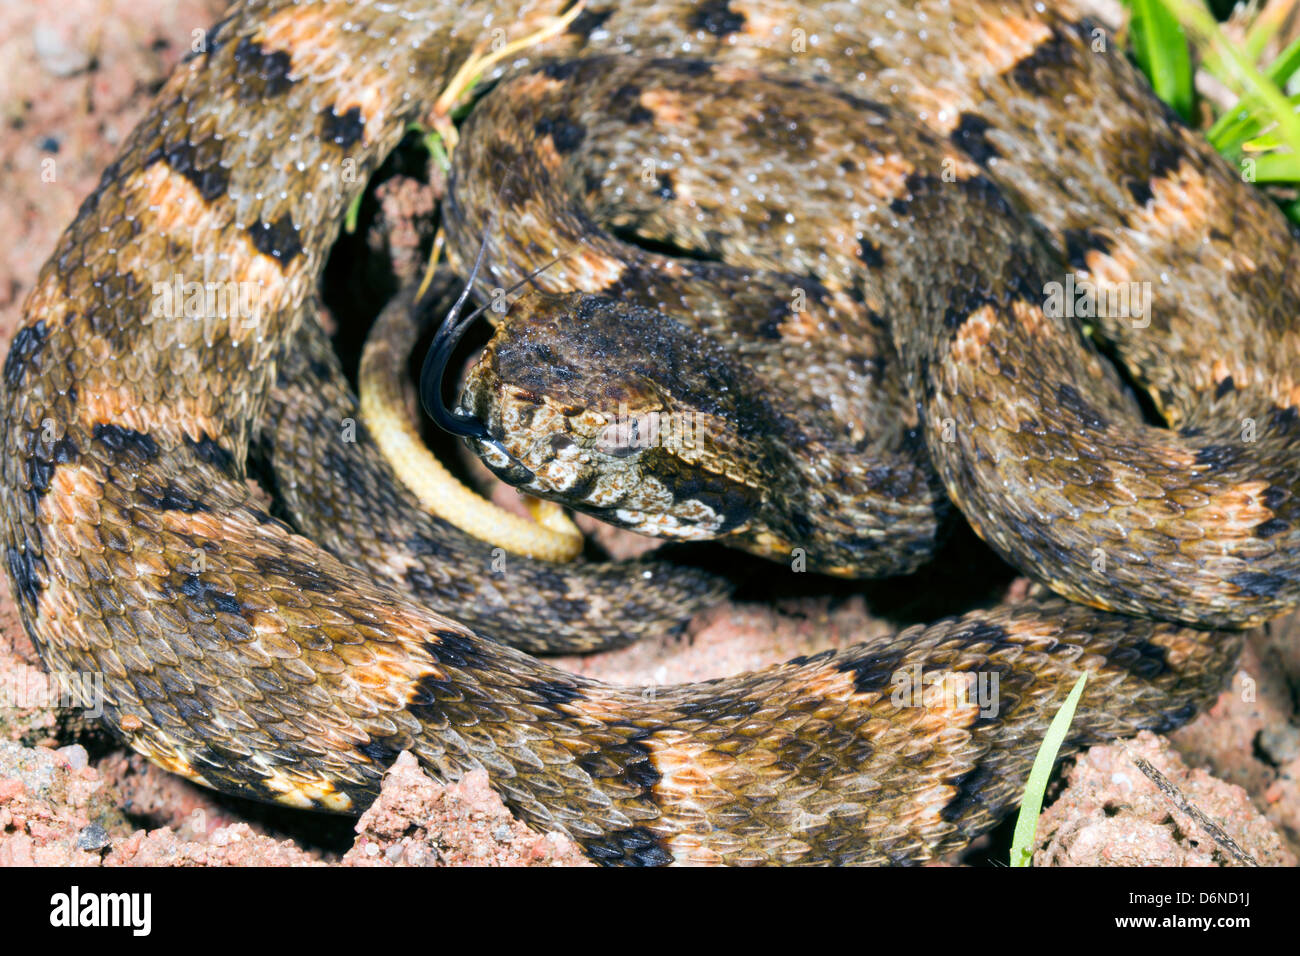 Fer de Lance (Bothrops atrox) a venomous viper from Ecuador Stock Photo